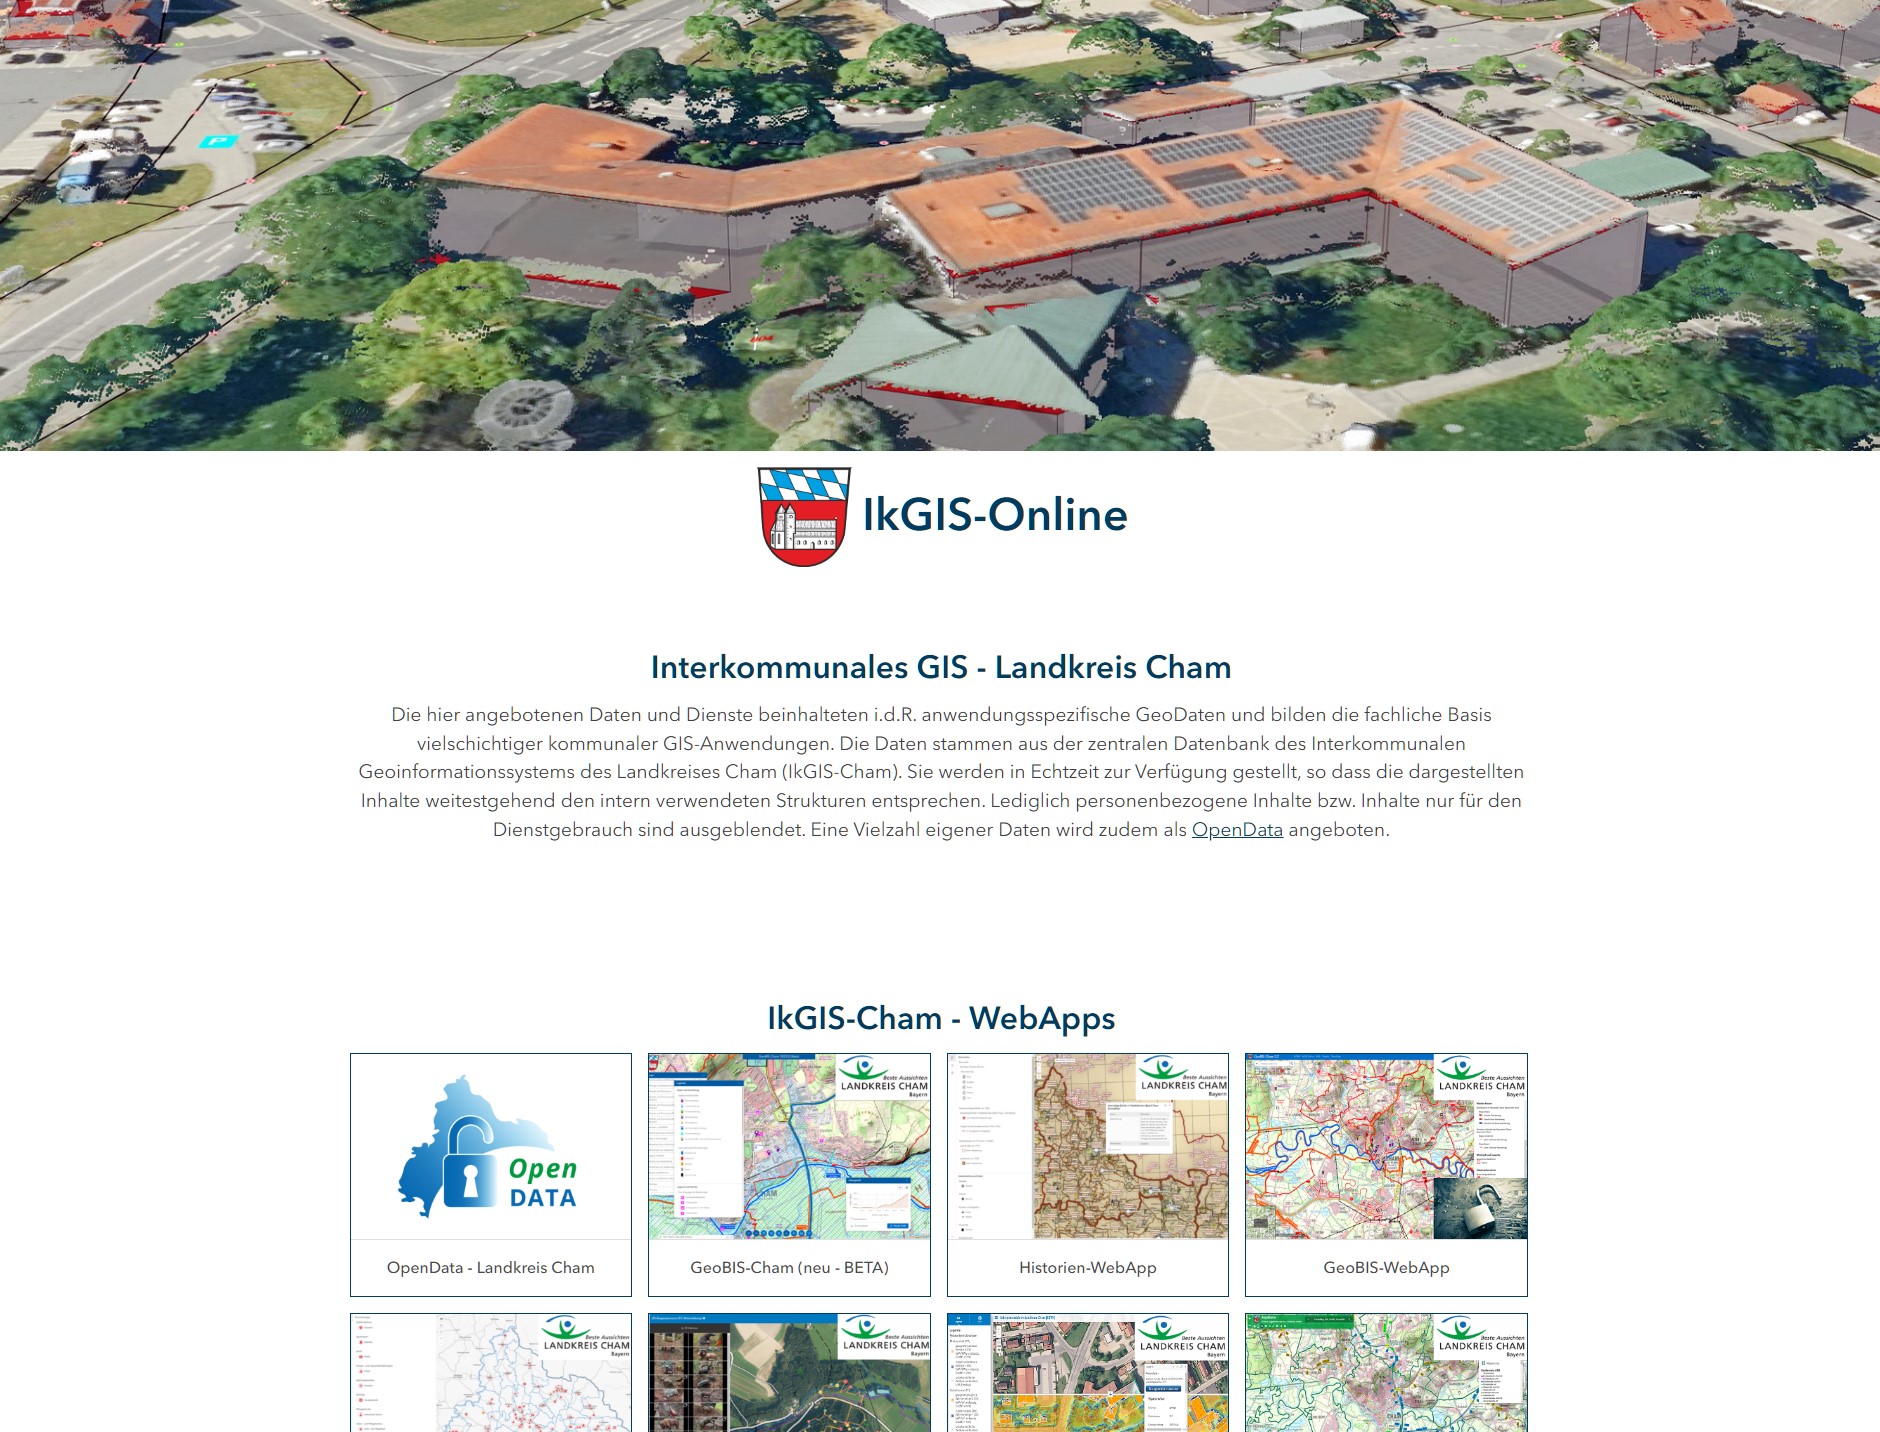 Zur externen GIS-Anwendung IkGIS-Online unter arcgis.com